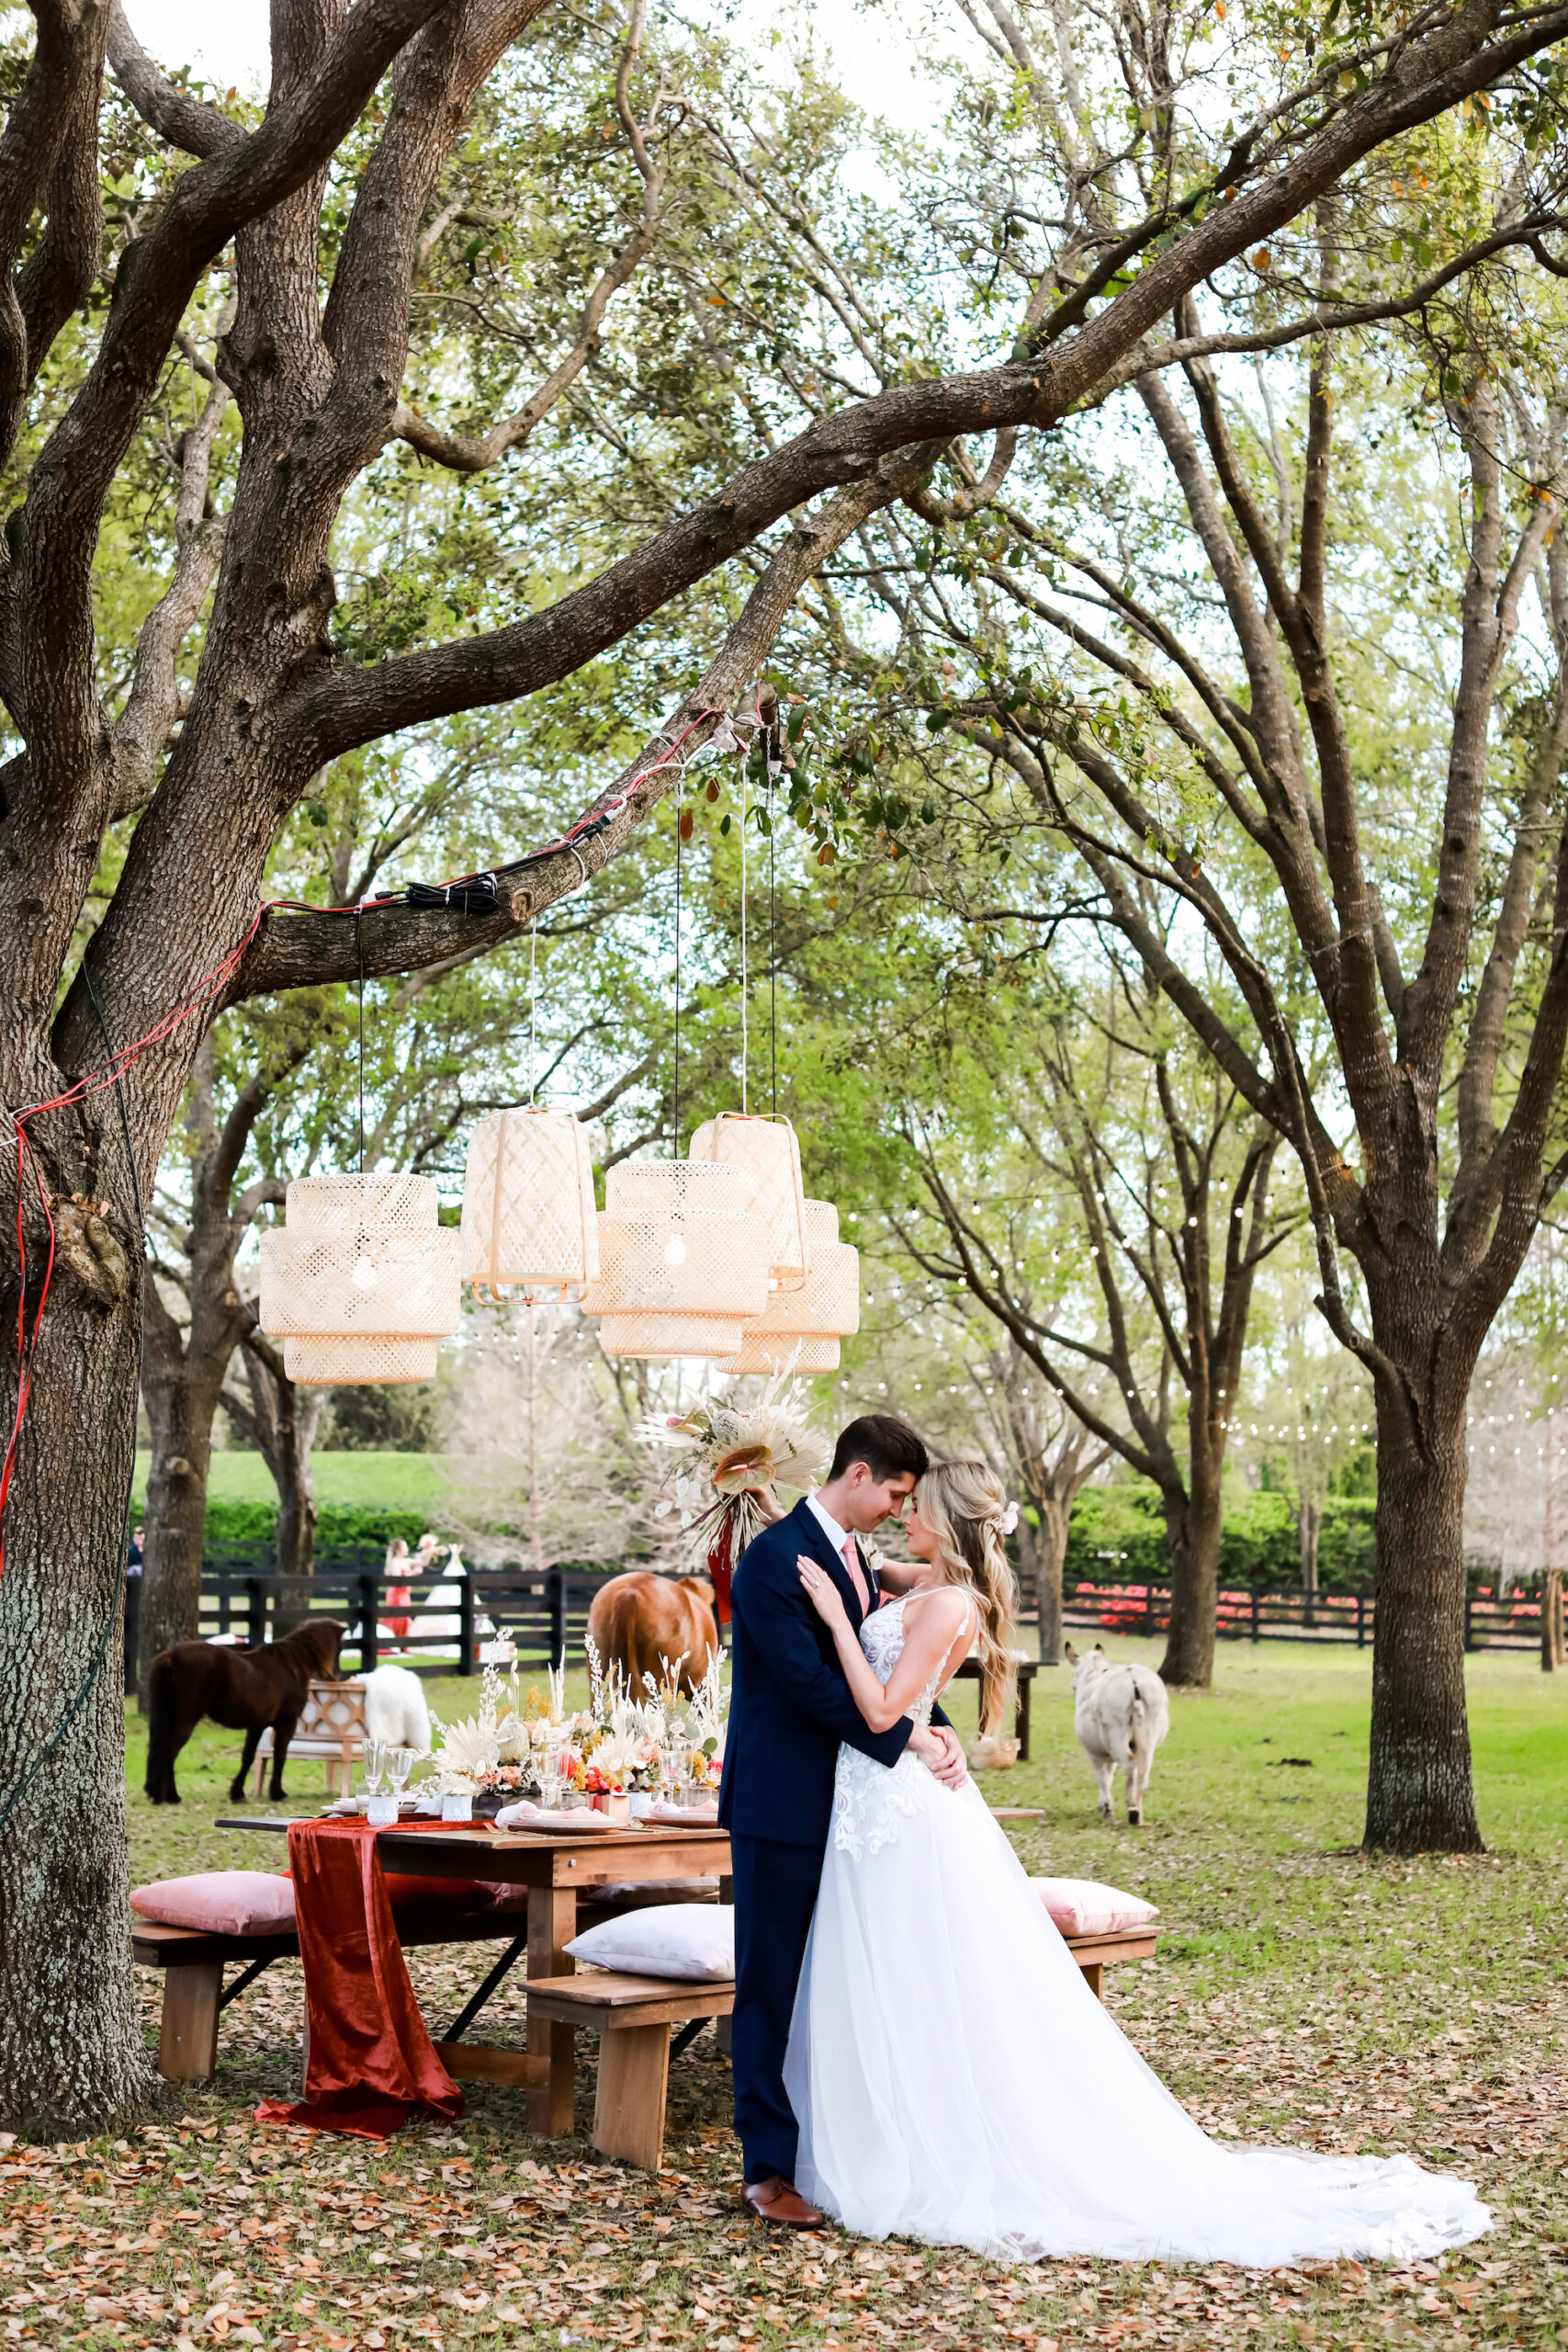 Bride and Groom Wedding Portrait at Outdoor Fall Reception Ideas | Tampa Bay Wedding Venue Mision Lago Estate | Lifelong Photography